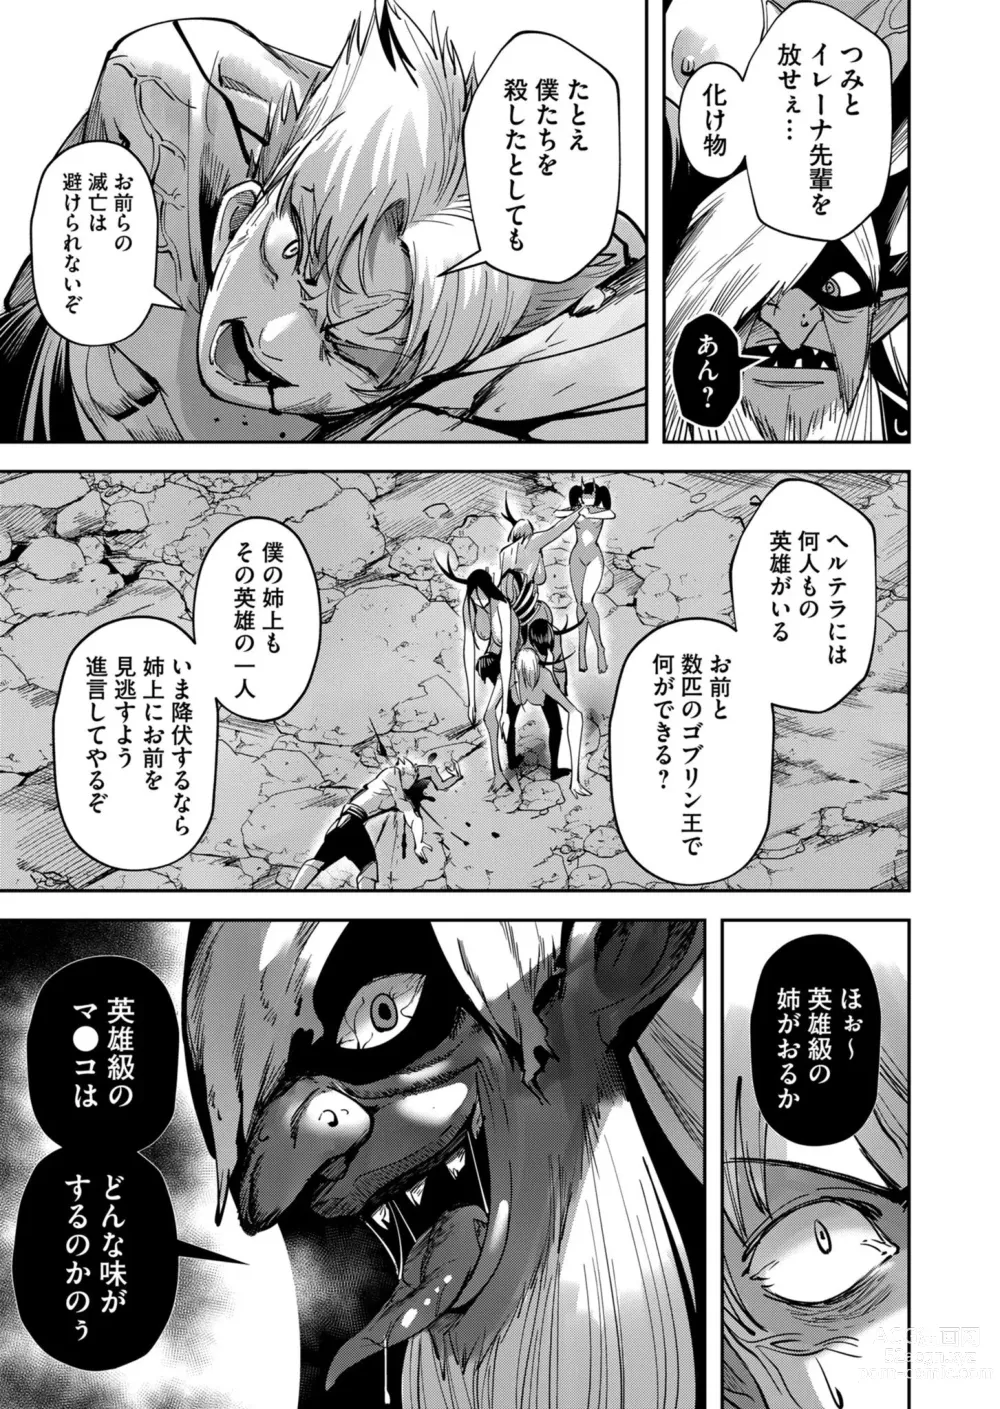 Page 15 of manga Kichiku Eiyuu Vol.04